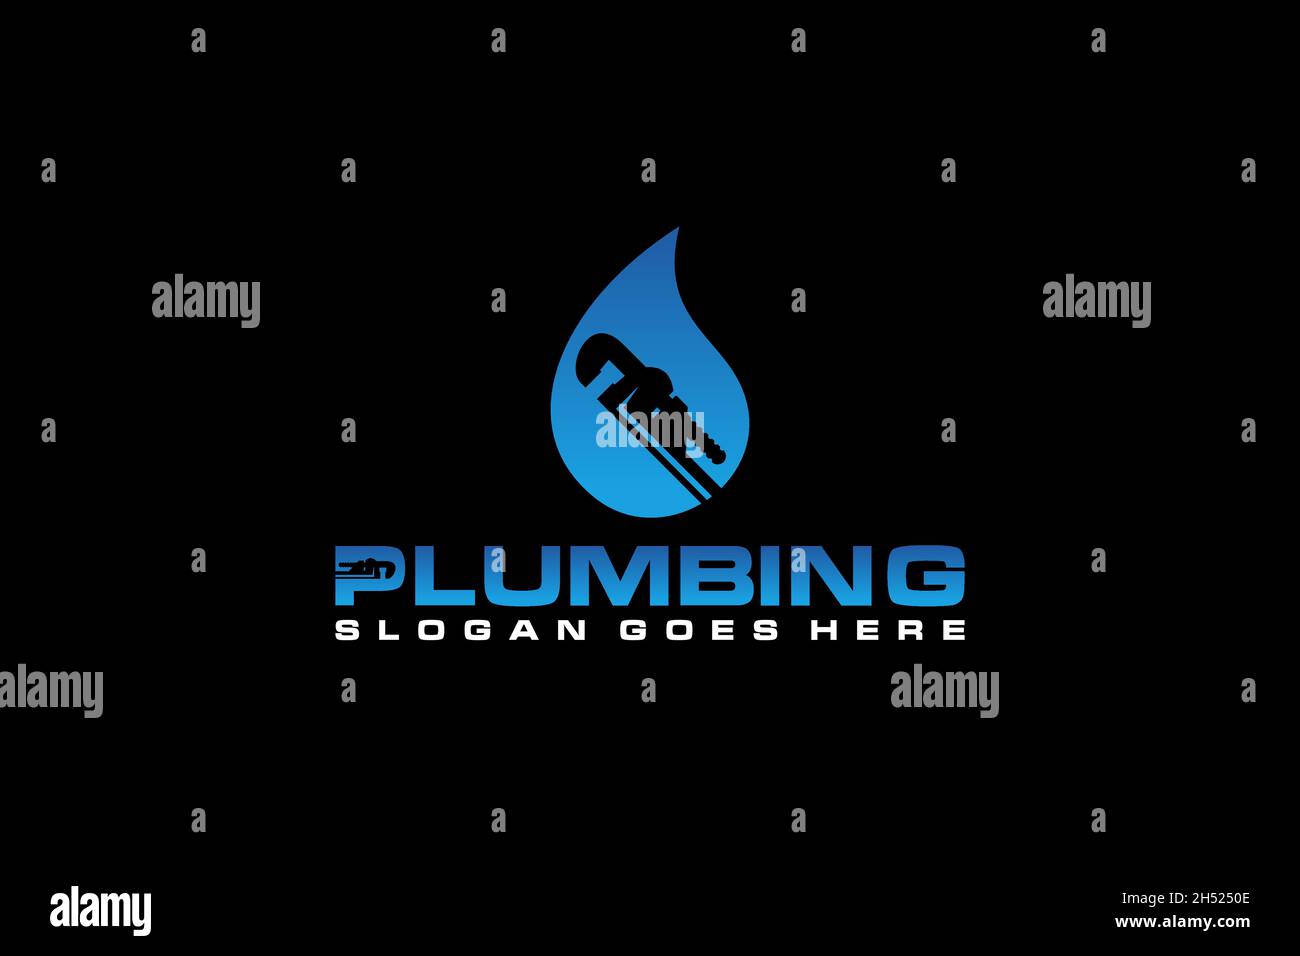 Plumbing Service Logo Template, Water Service. Stock Vector